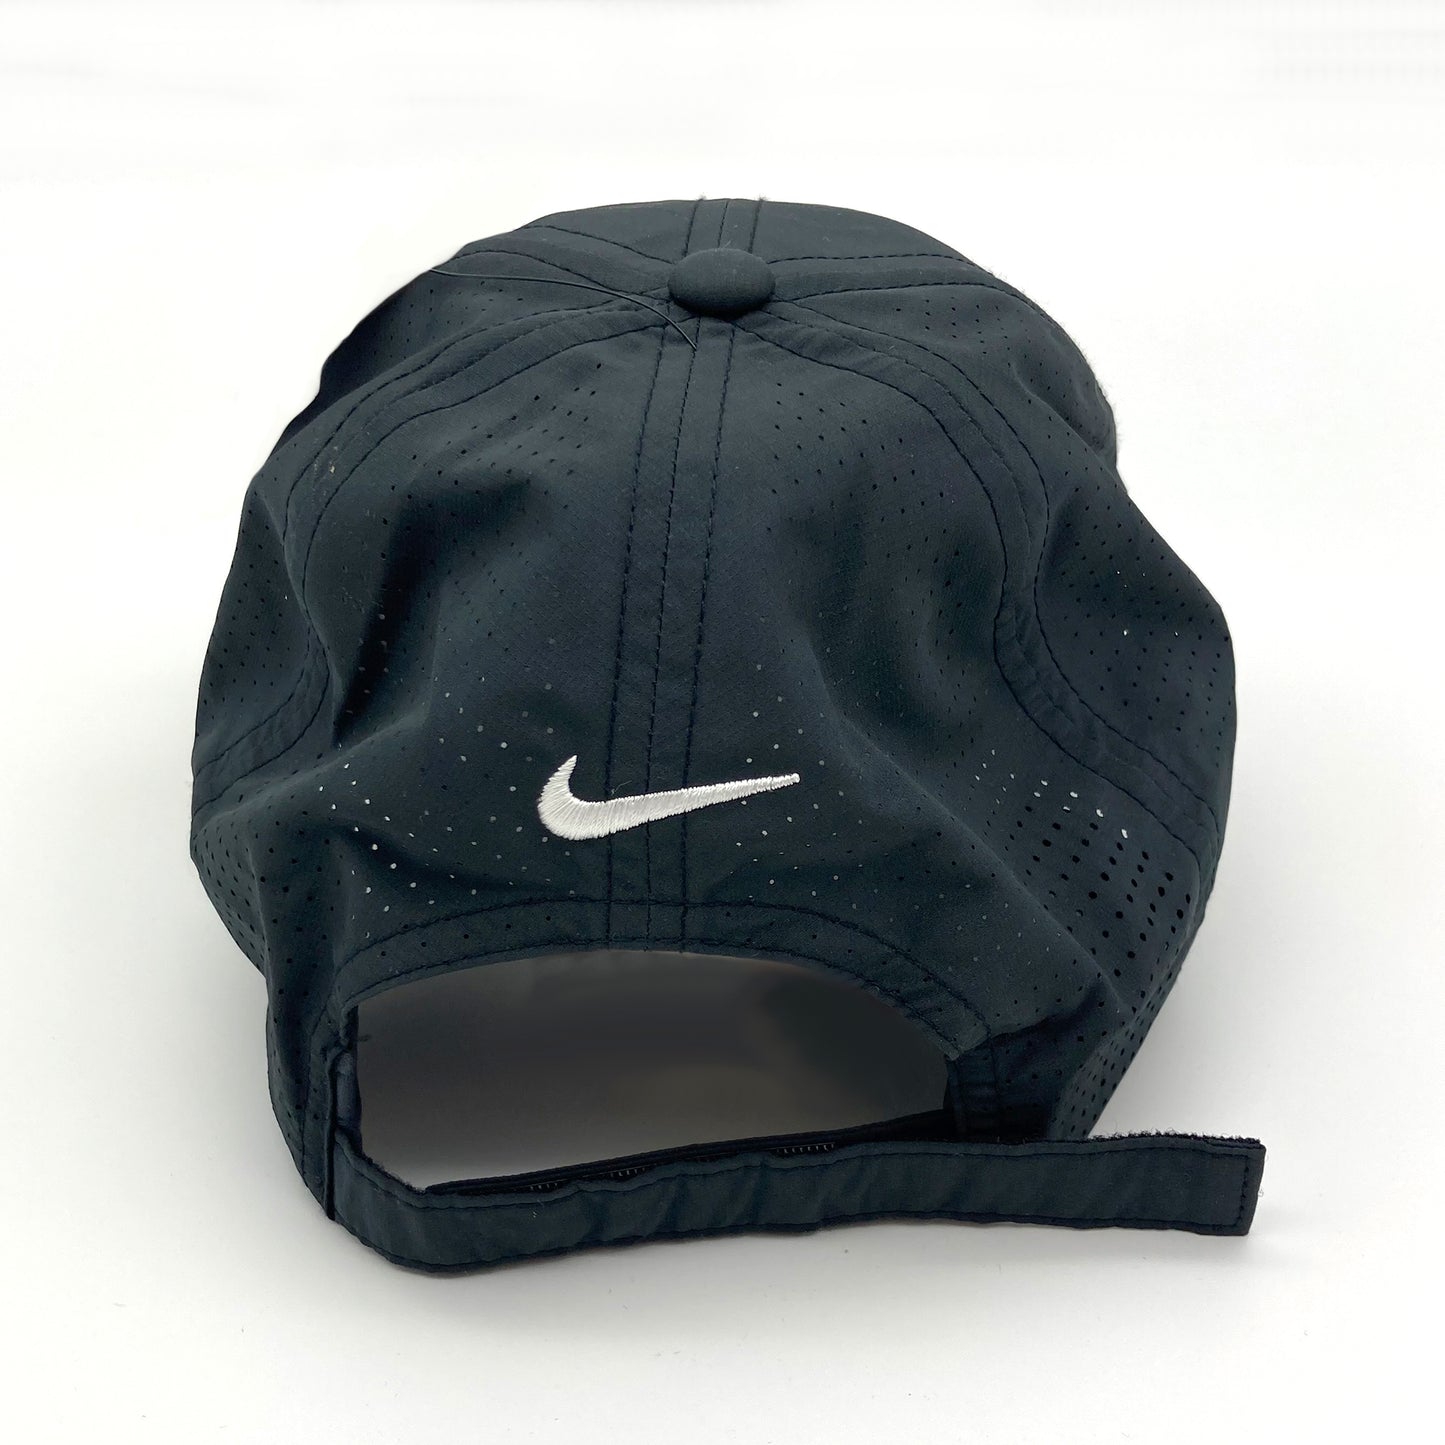 Minnesota Nike Hat - Black